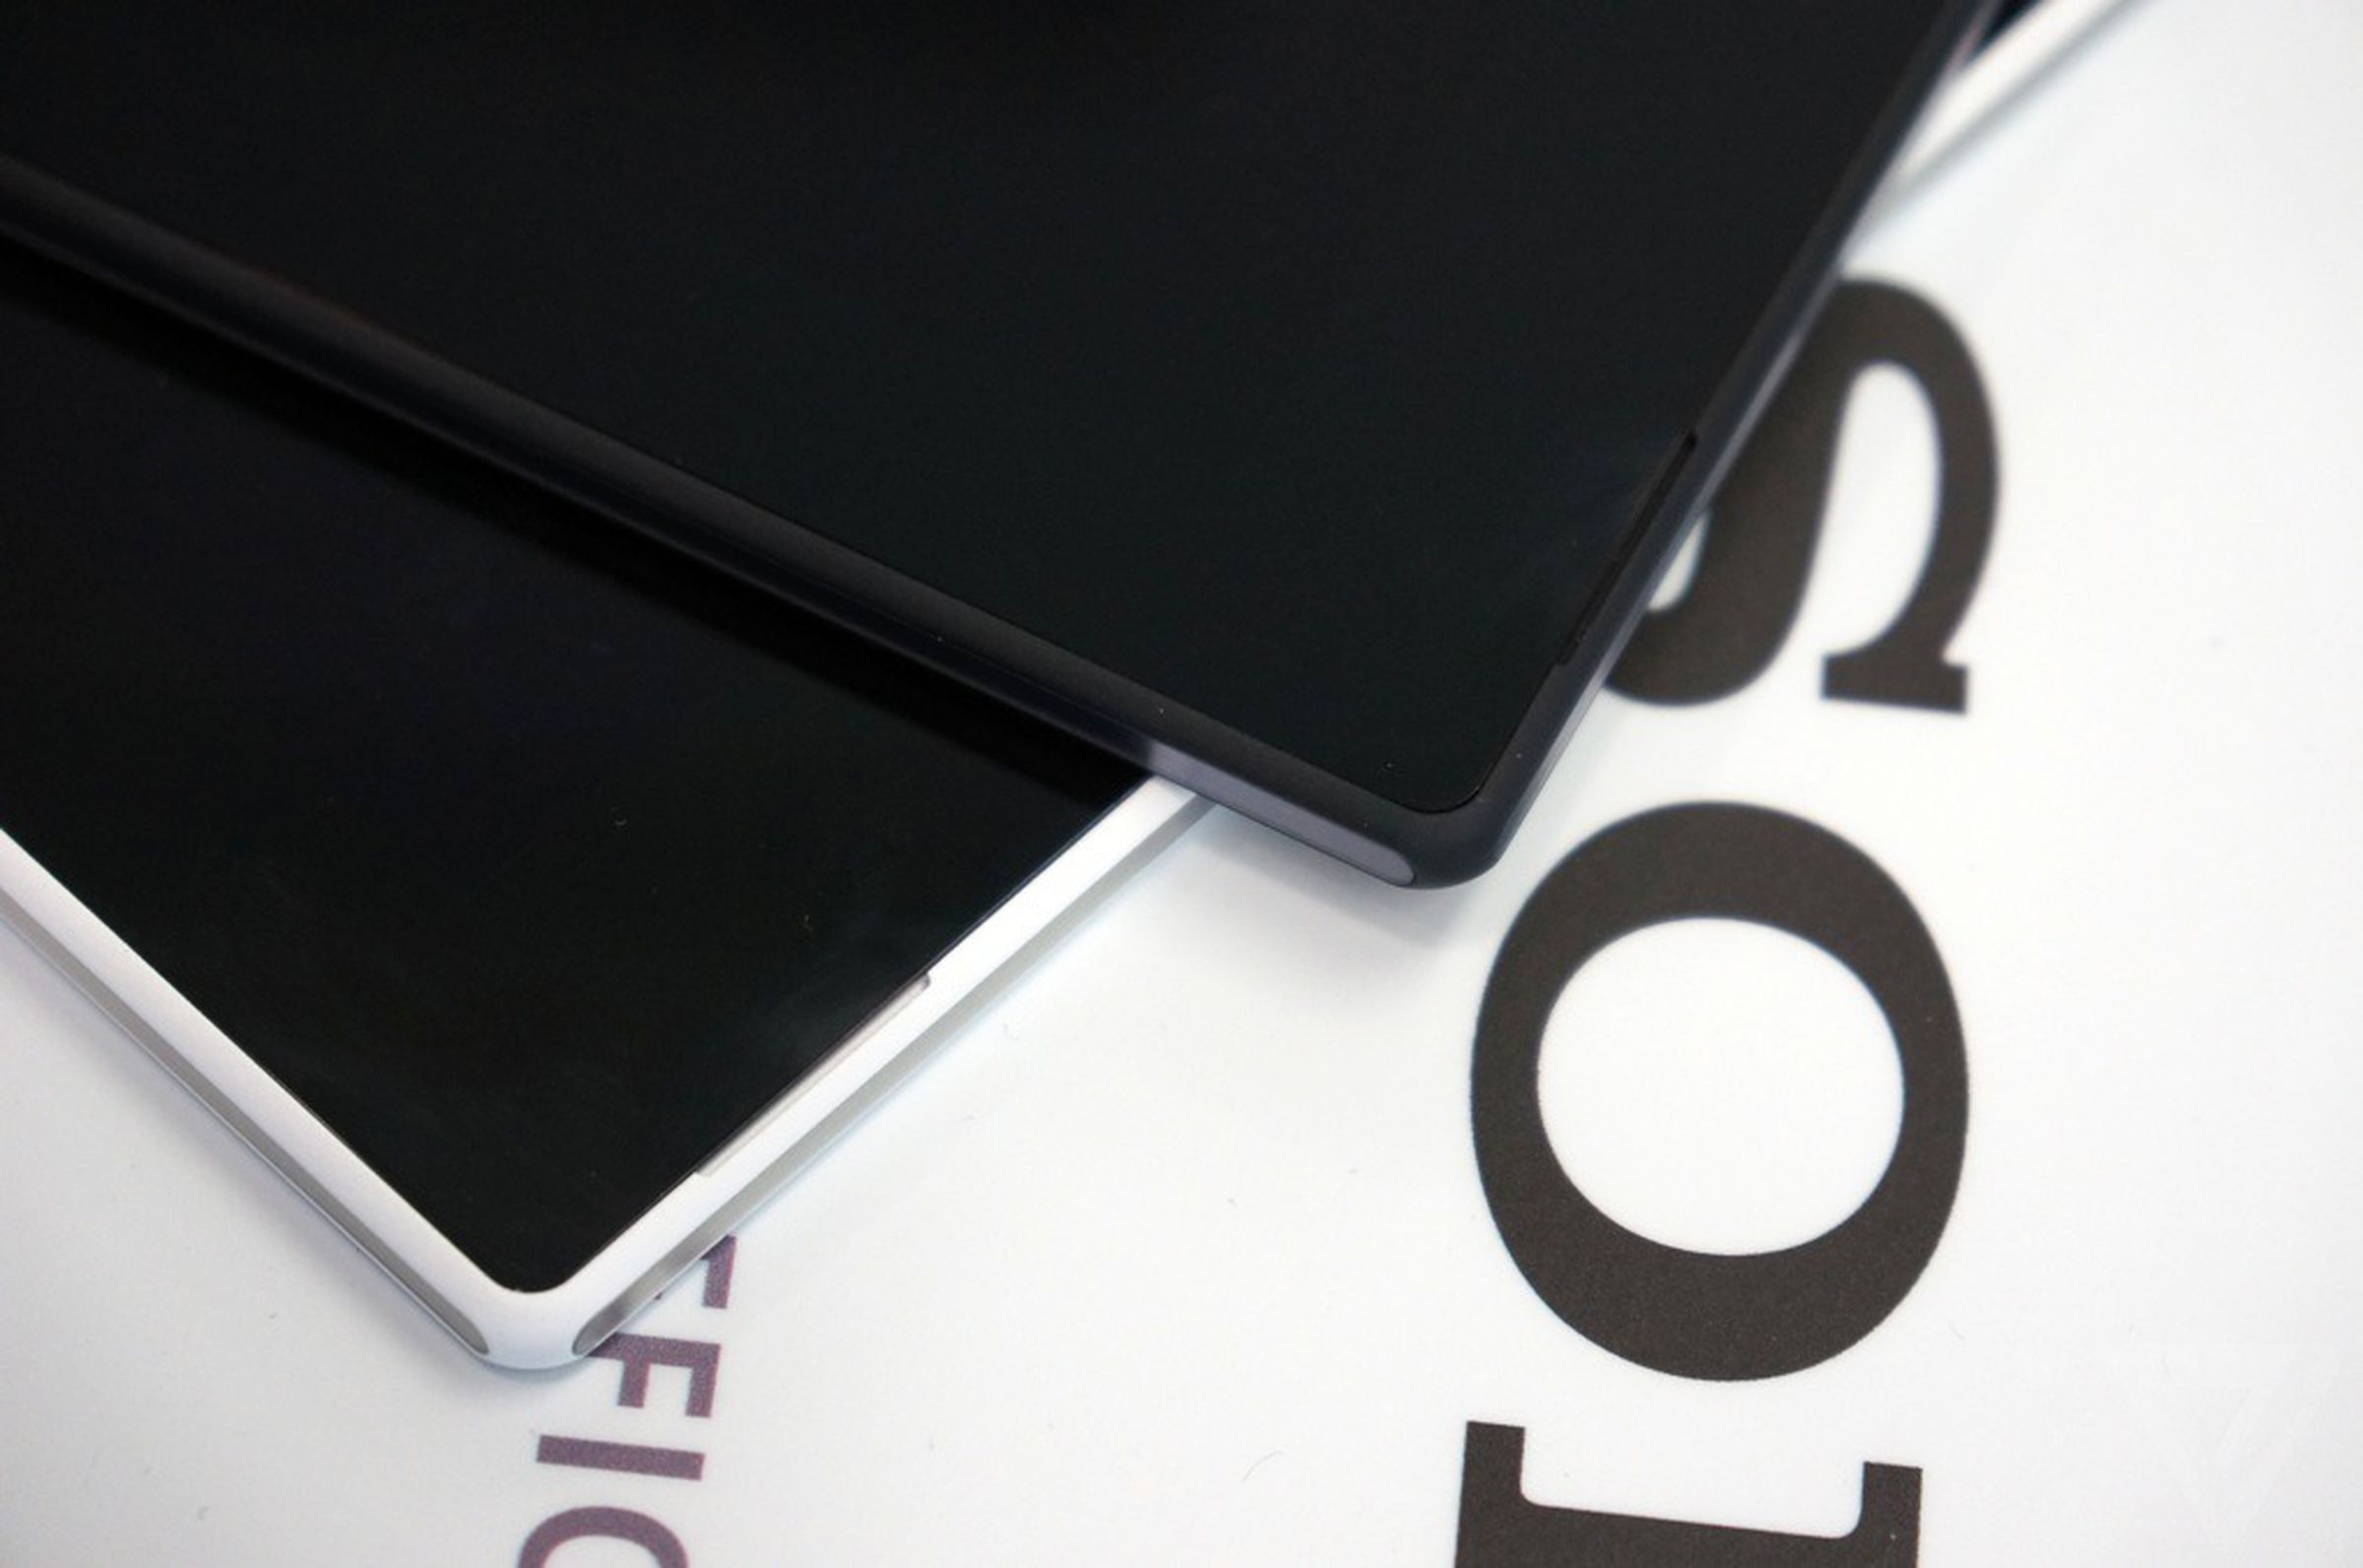 Sony Xperia Z2 Tablet hands-on photos